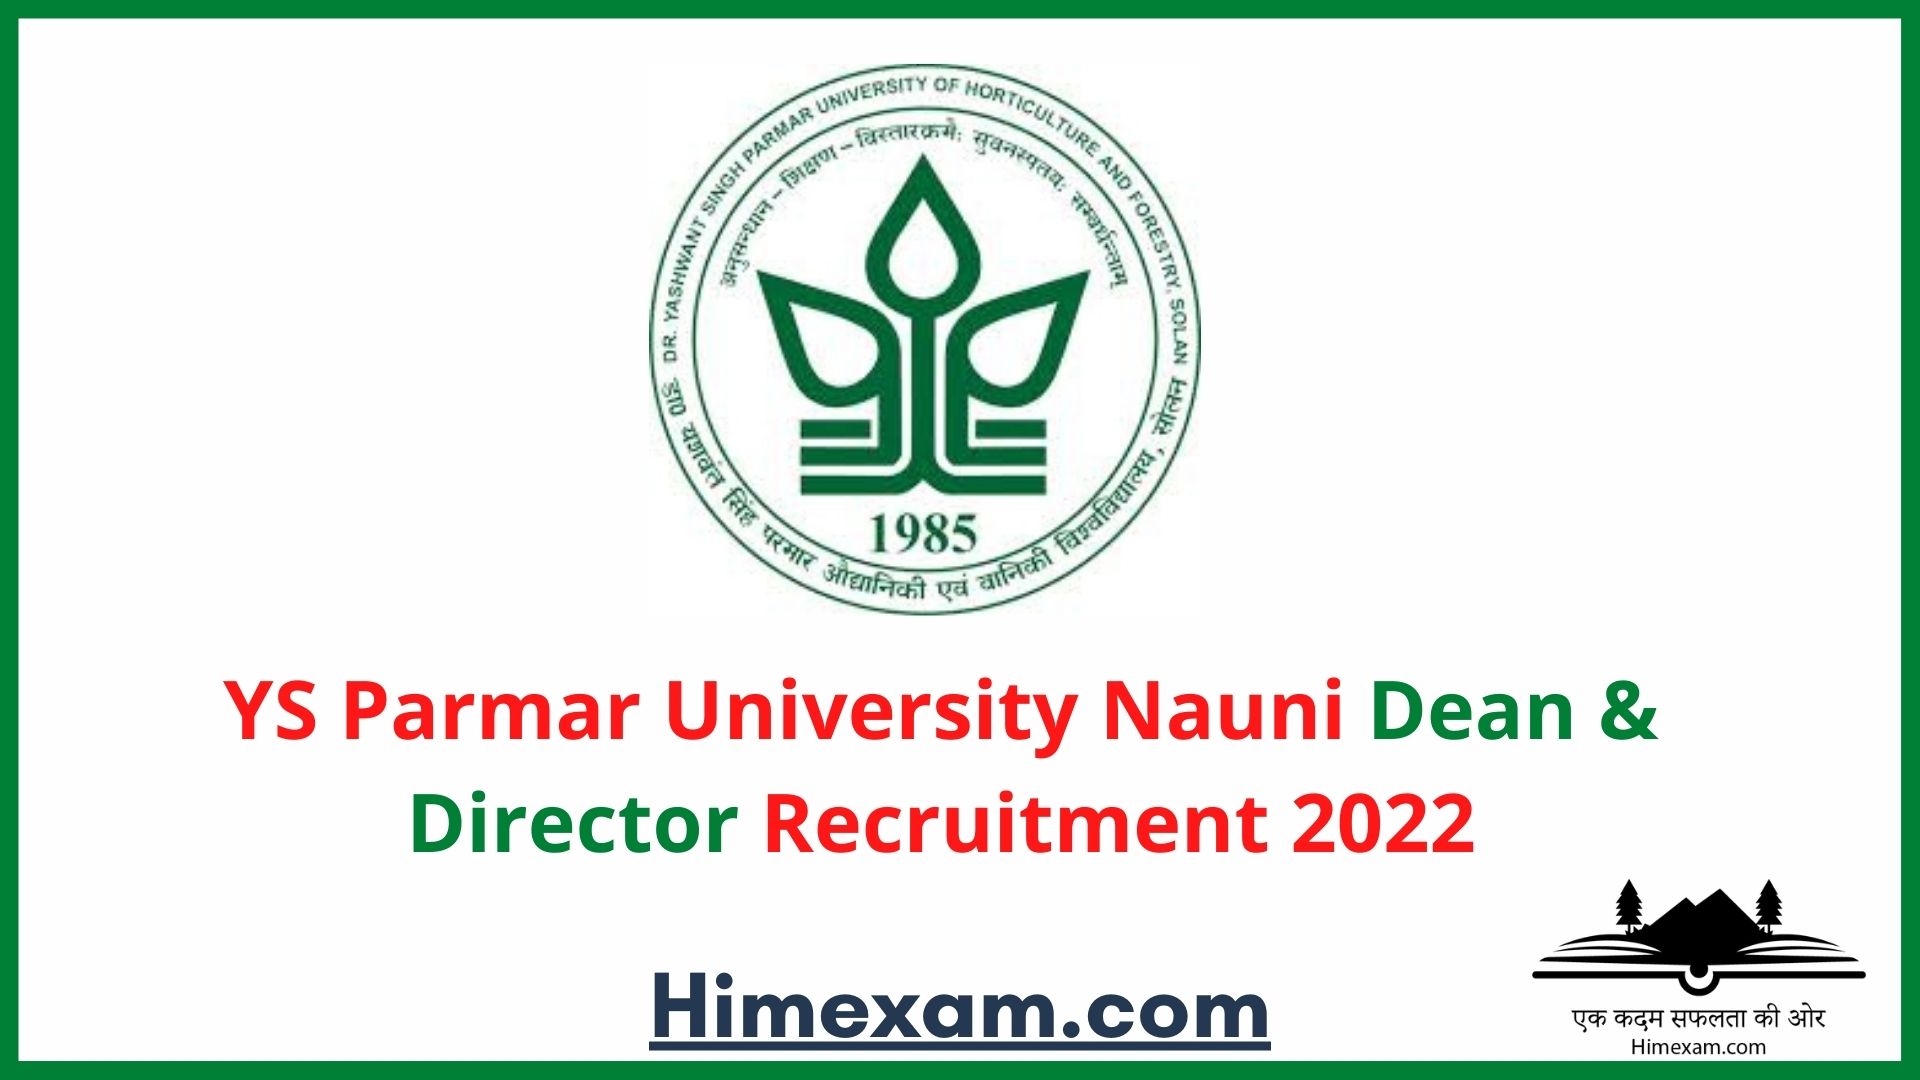 YS Parmar University Nauni Dean & Director Recruitment 2022